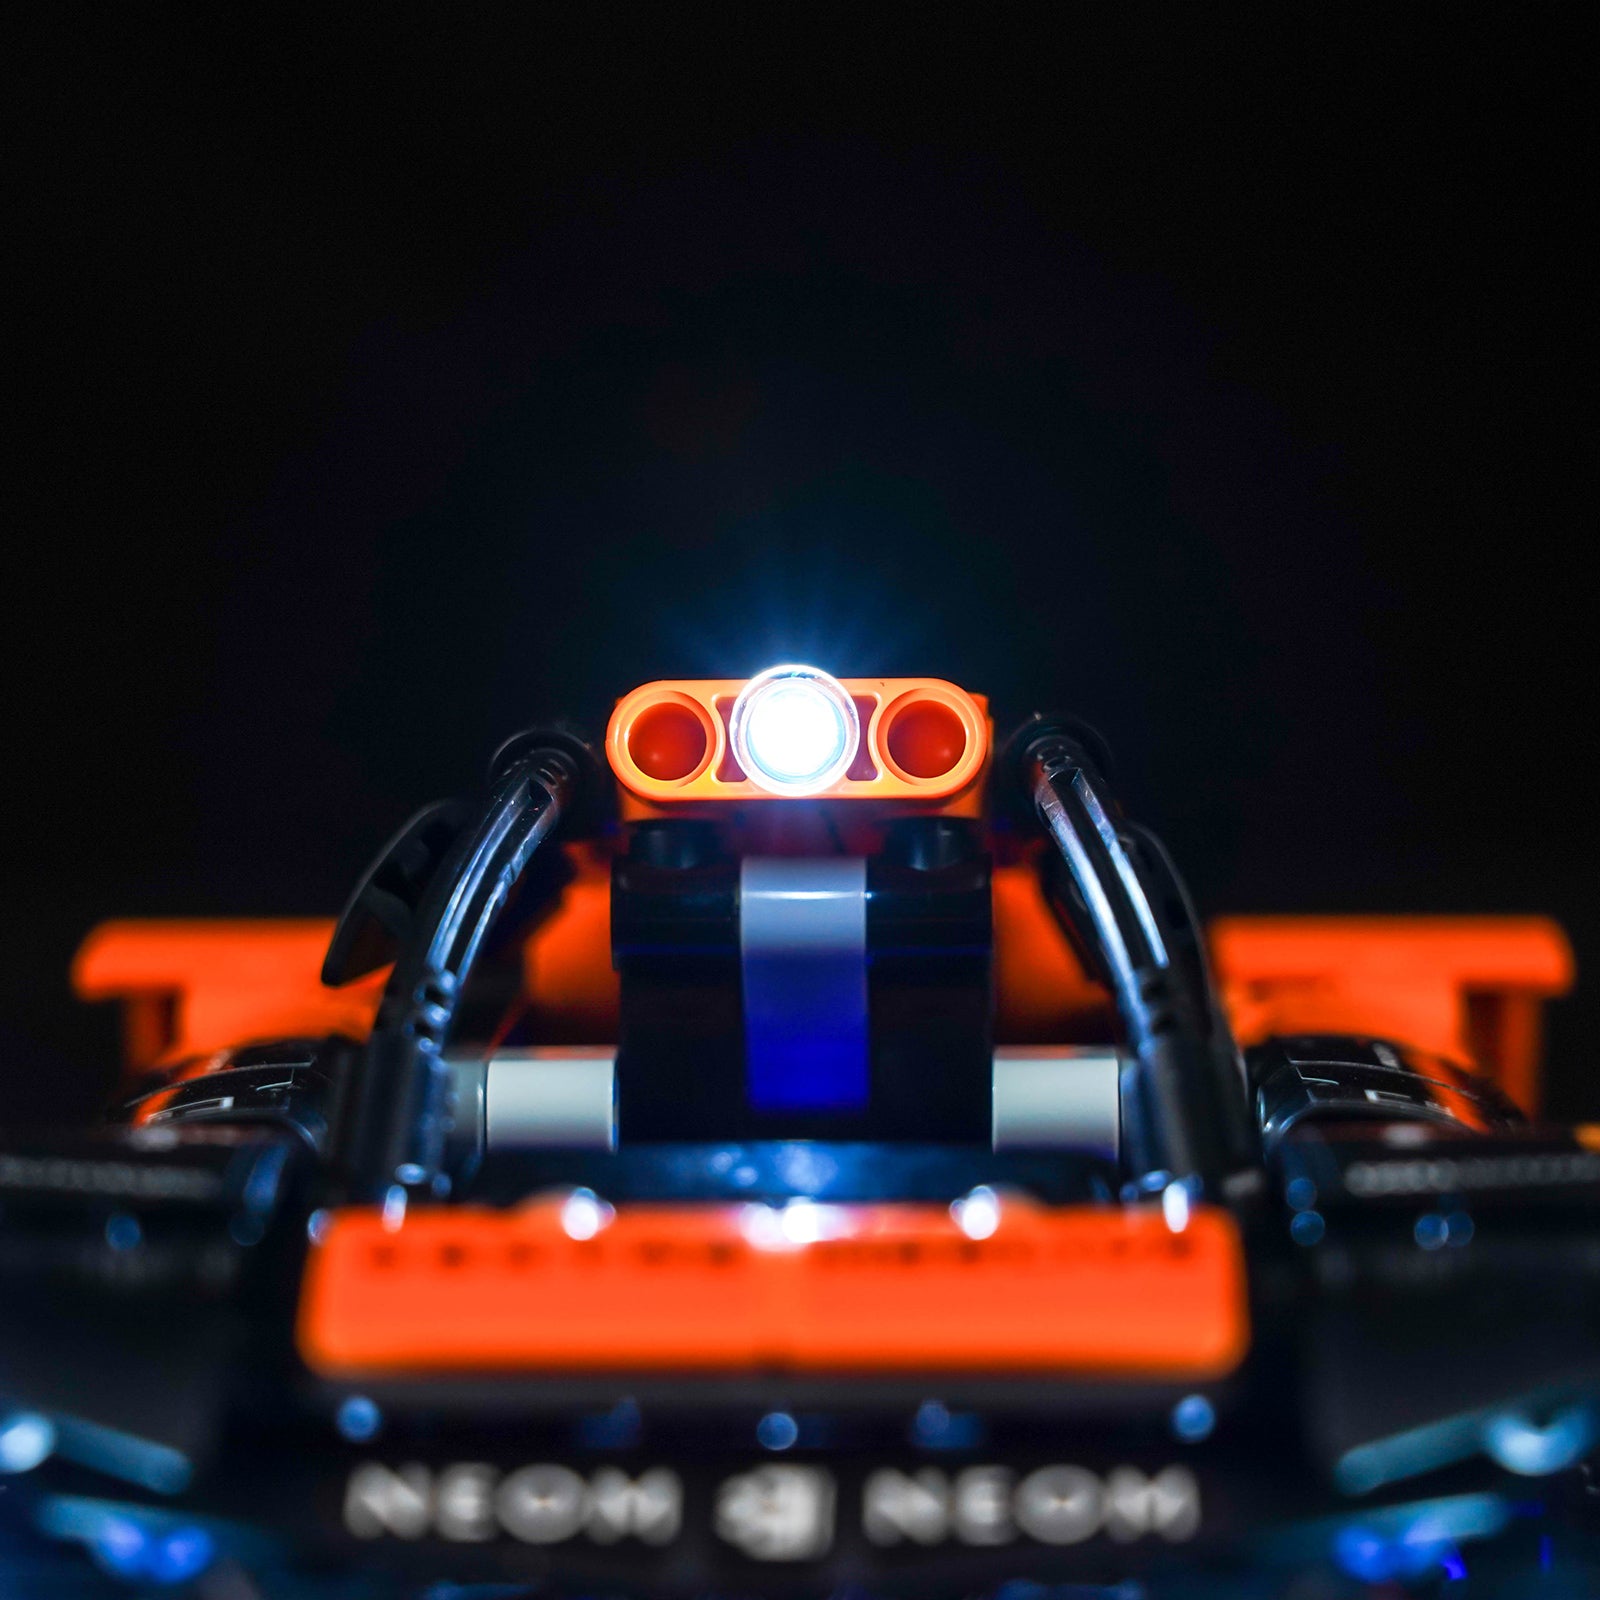 LEGO Technic 42166 NEOM McLaren Extreme E Race Car 42166